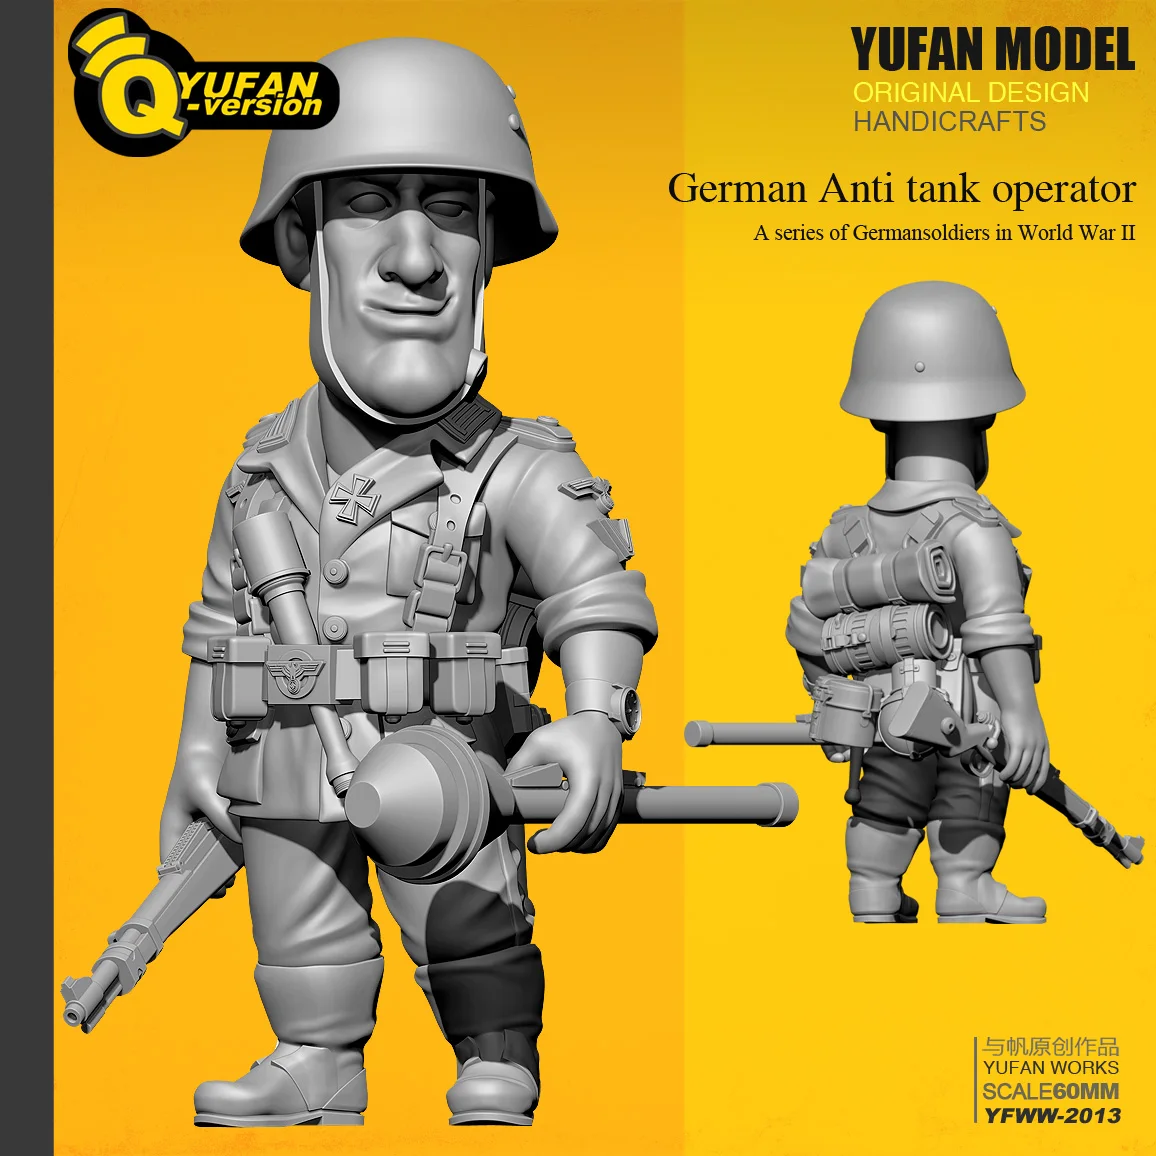 

Yufan Model 1/32 Figure Kits Q Version Resin Soldier (60mm High) Yfww-2013